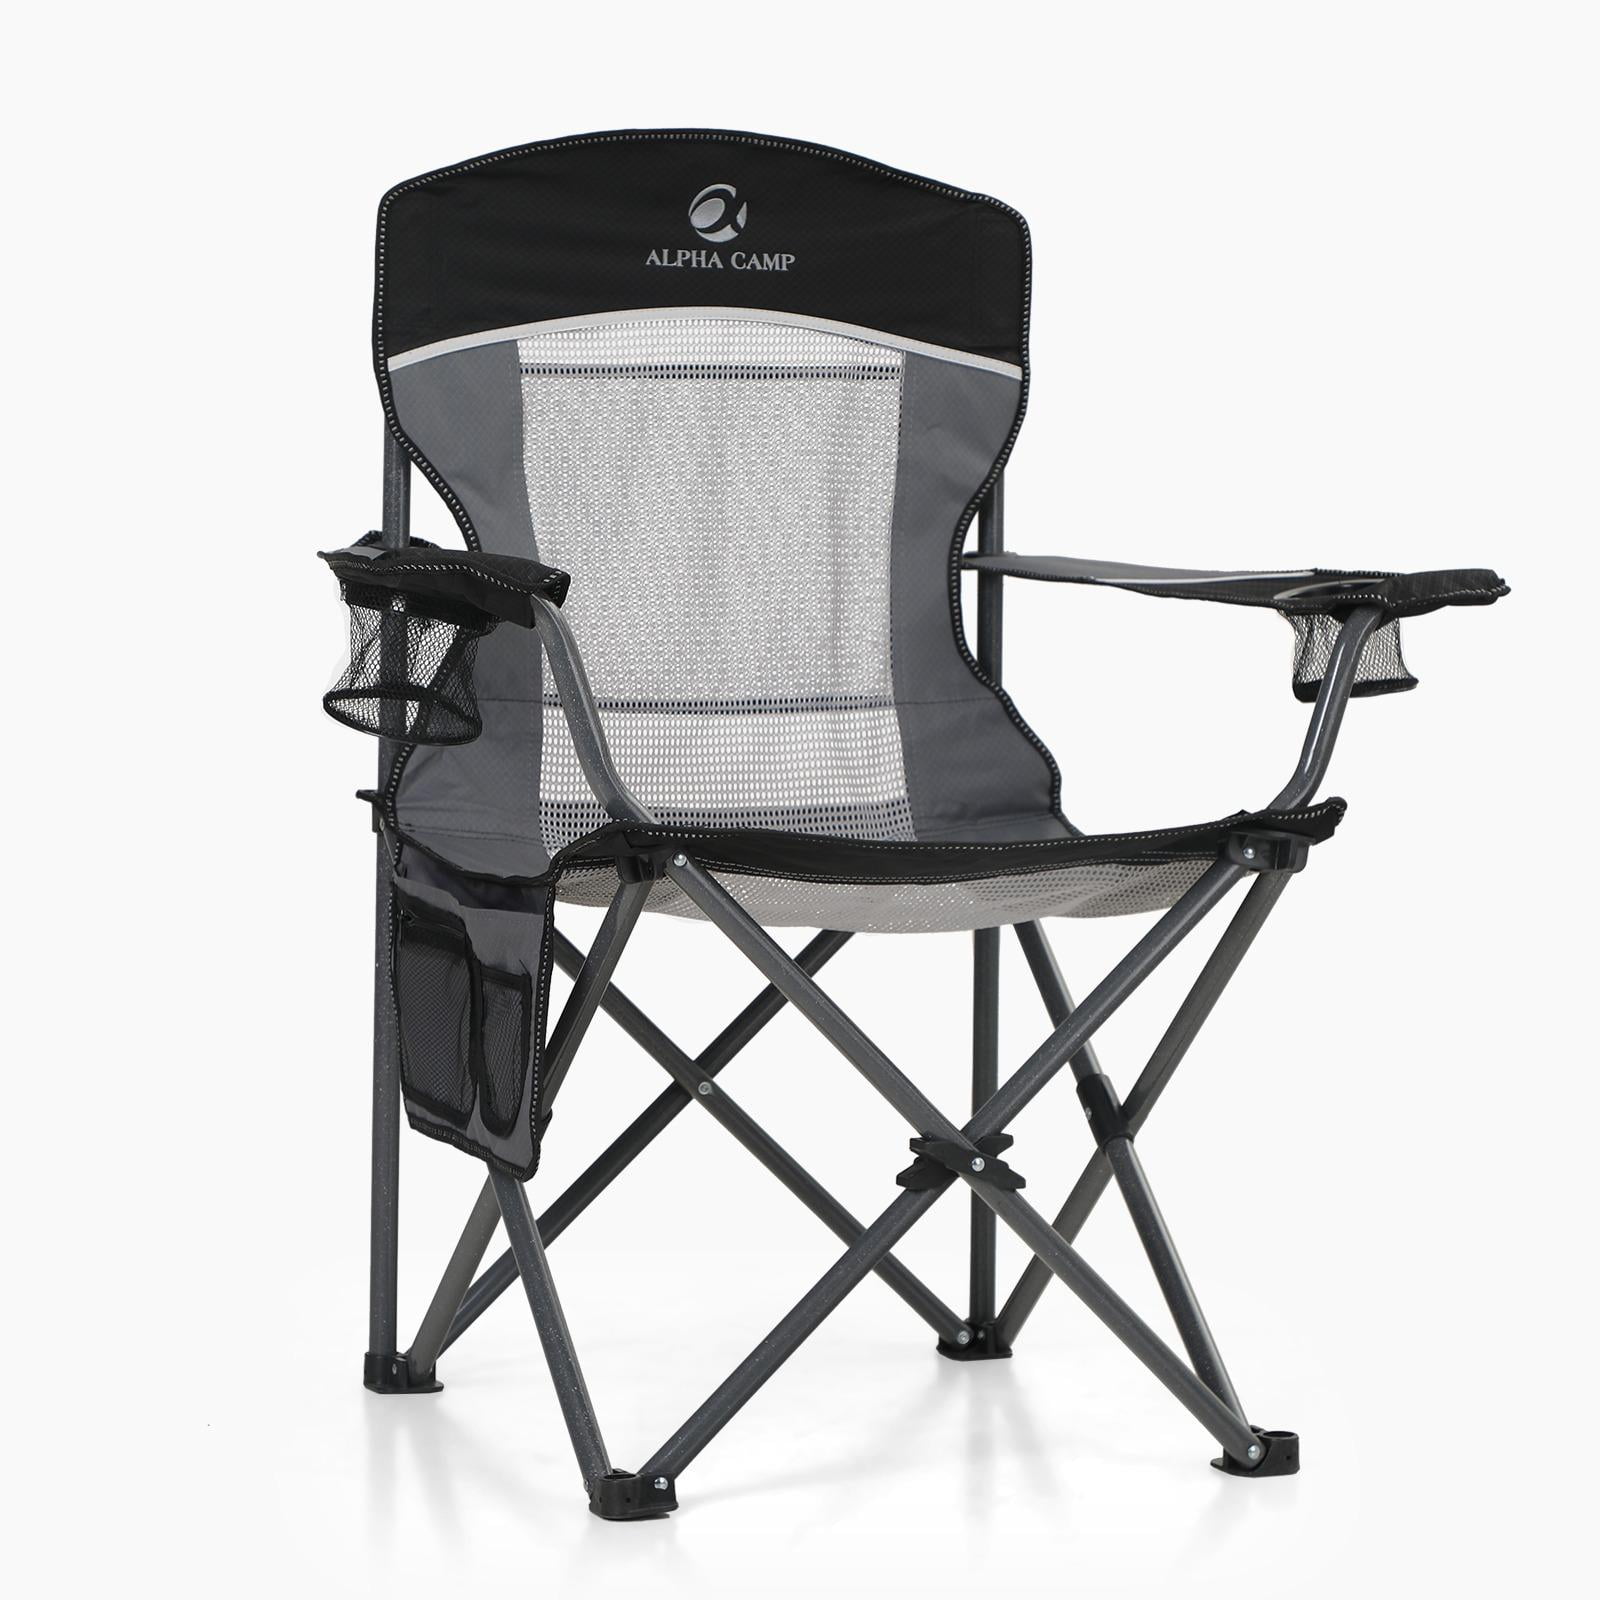 ARROWHEAD OUTDOOR Oversized Heavy-Duty Club Folding Camping Chair 